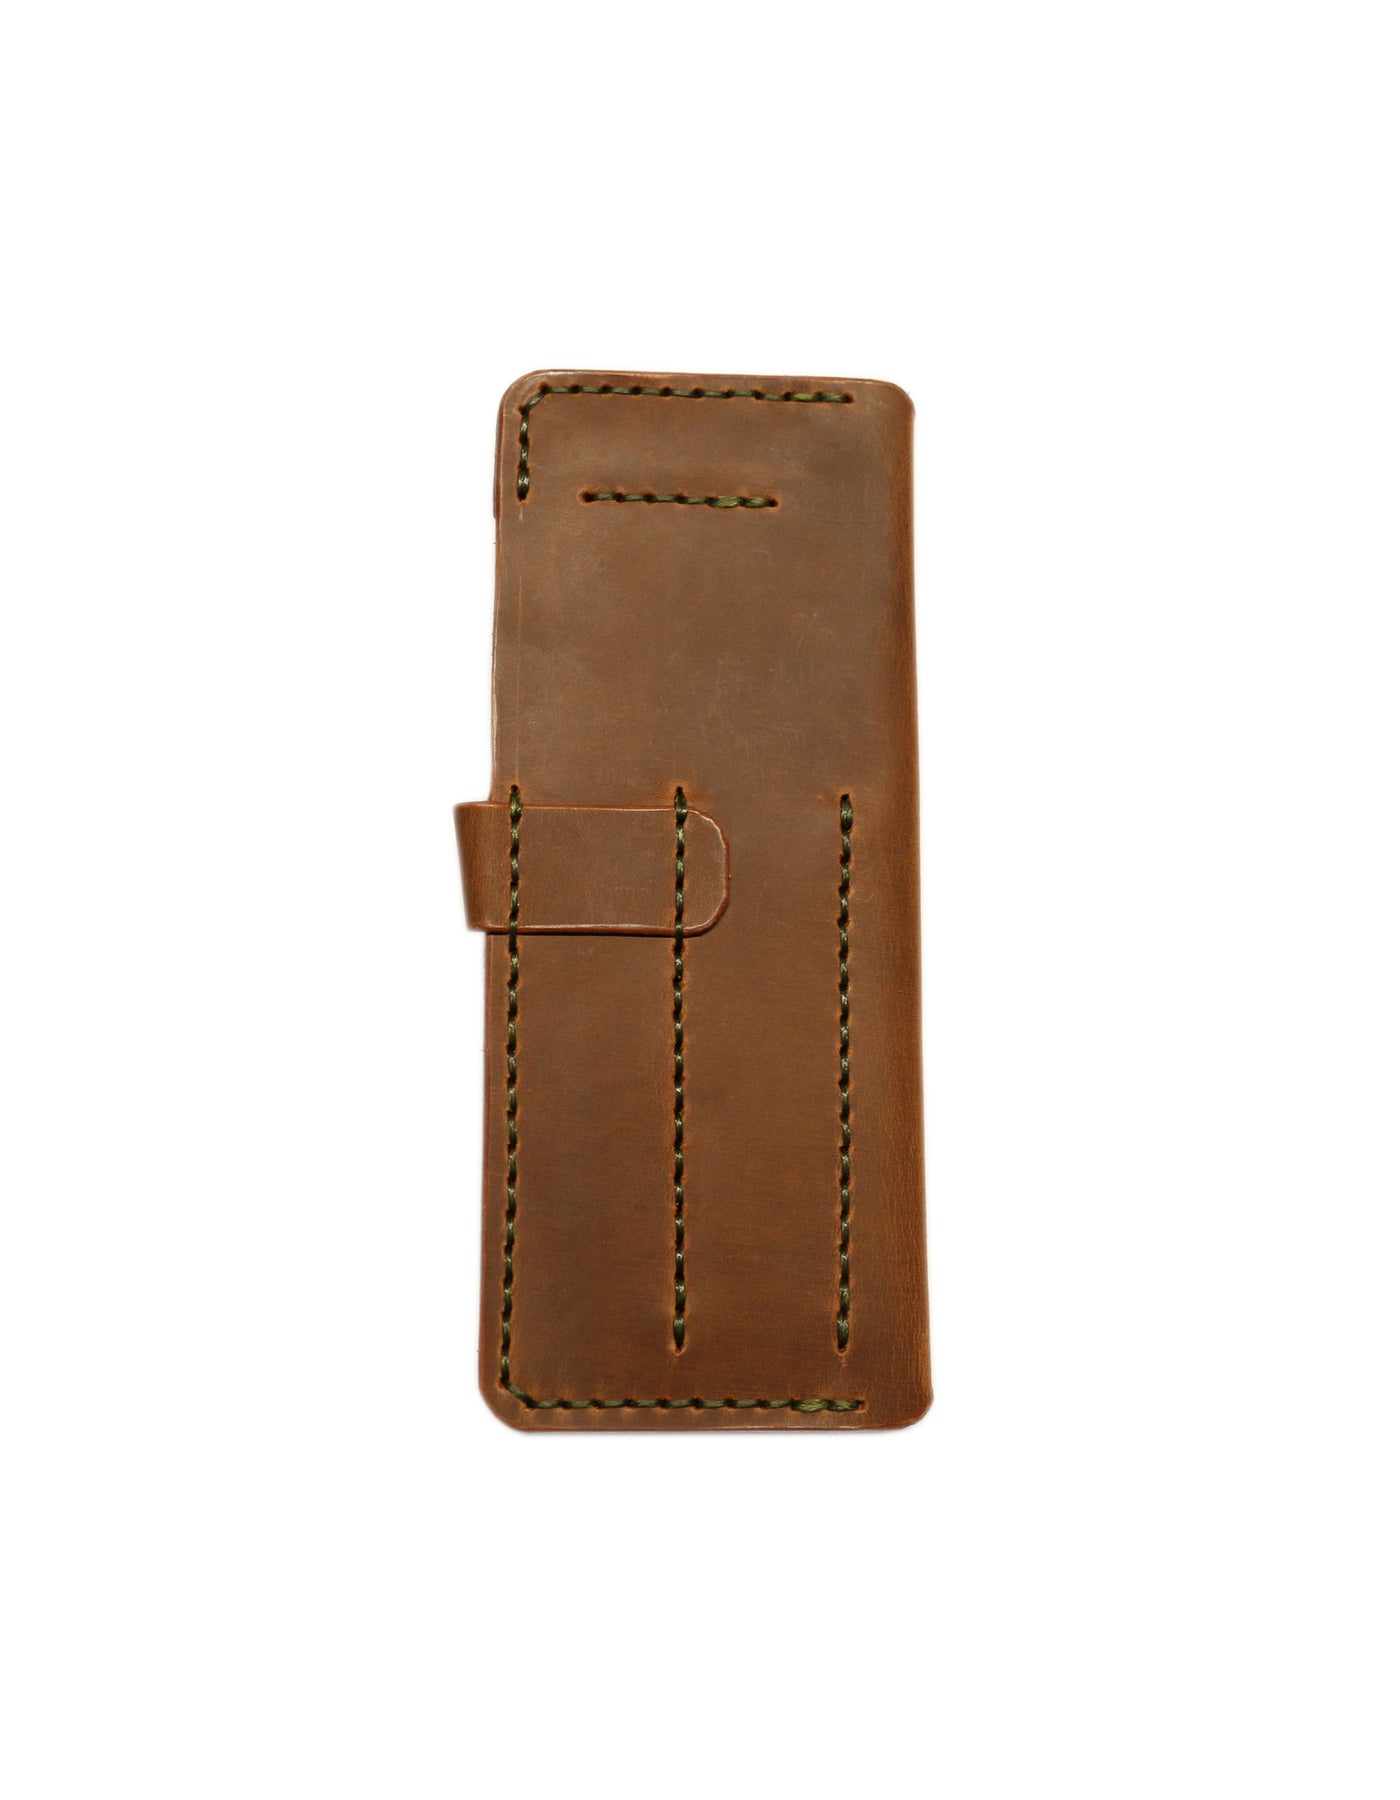 Sala Leather Wallet For Oud Picks MCD-203